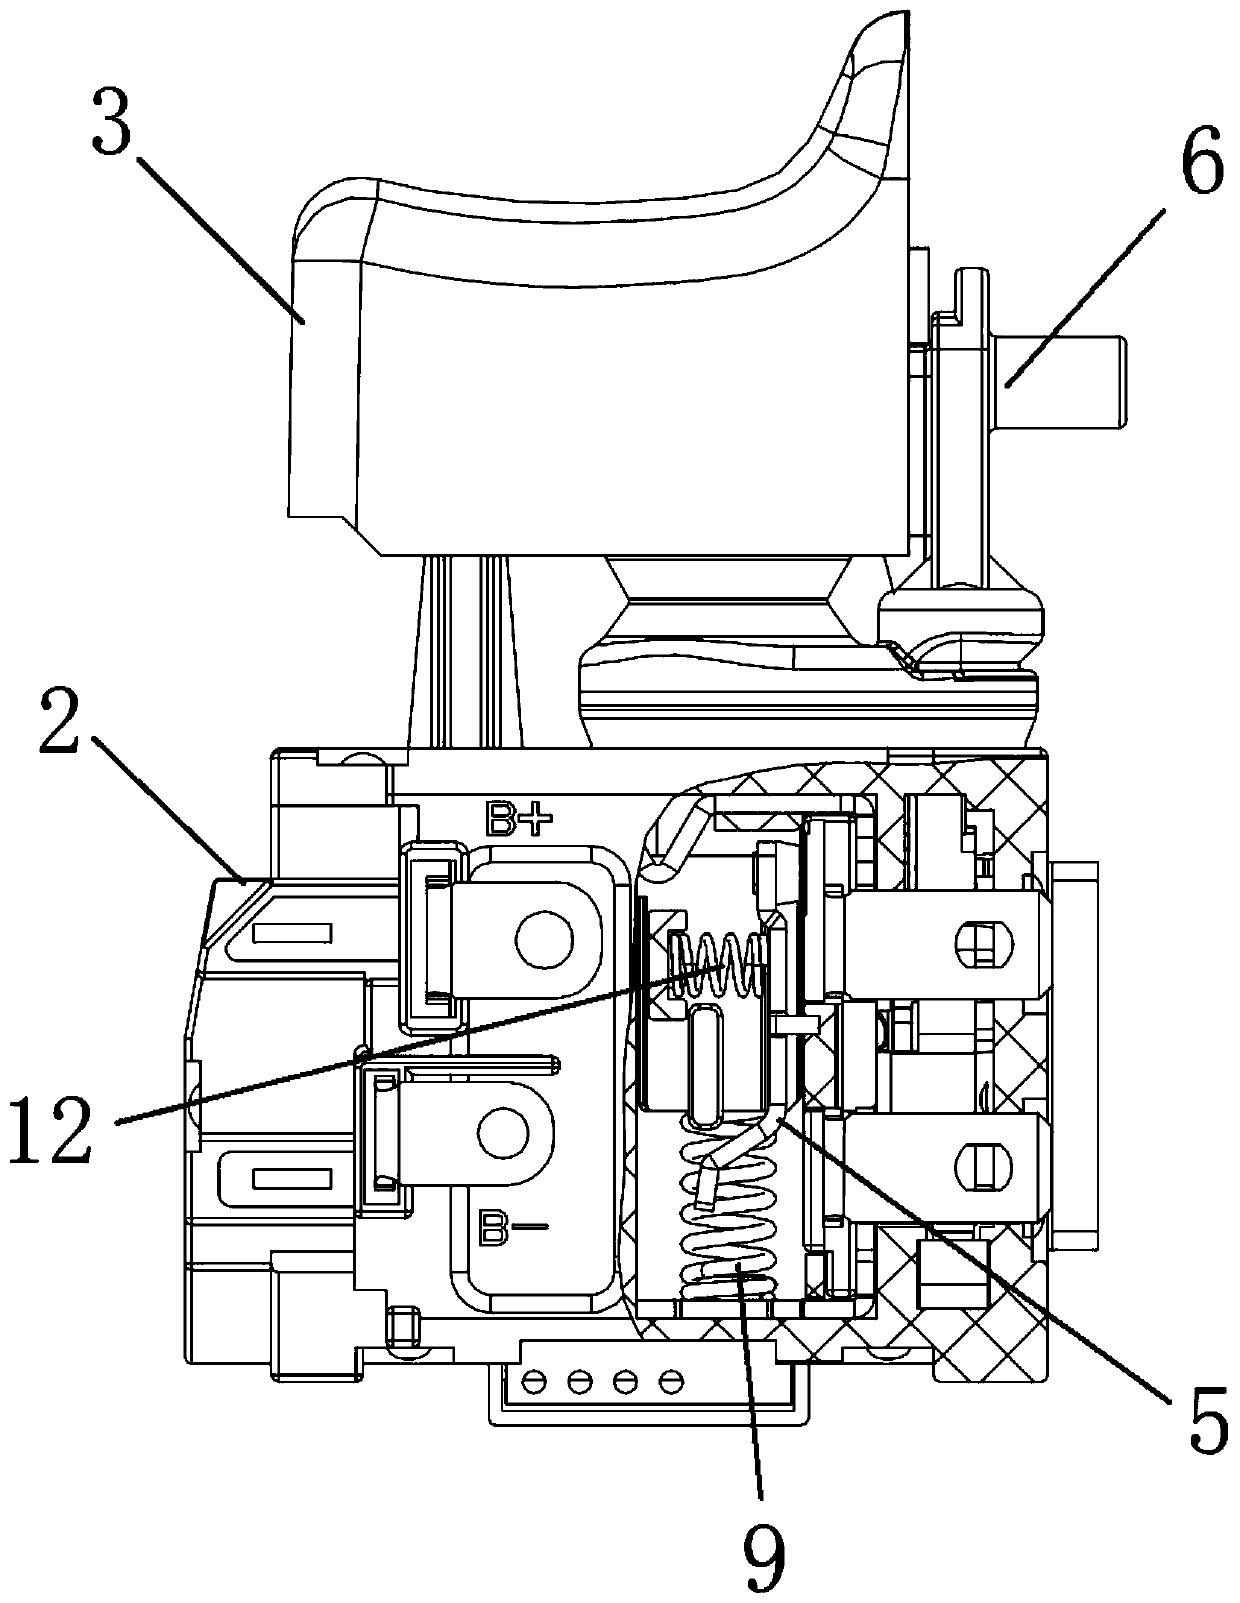 Reversing brake device of DC electric tool switch and DC electric tool switch